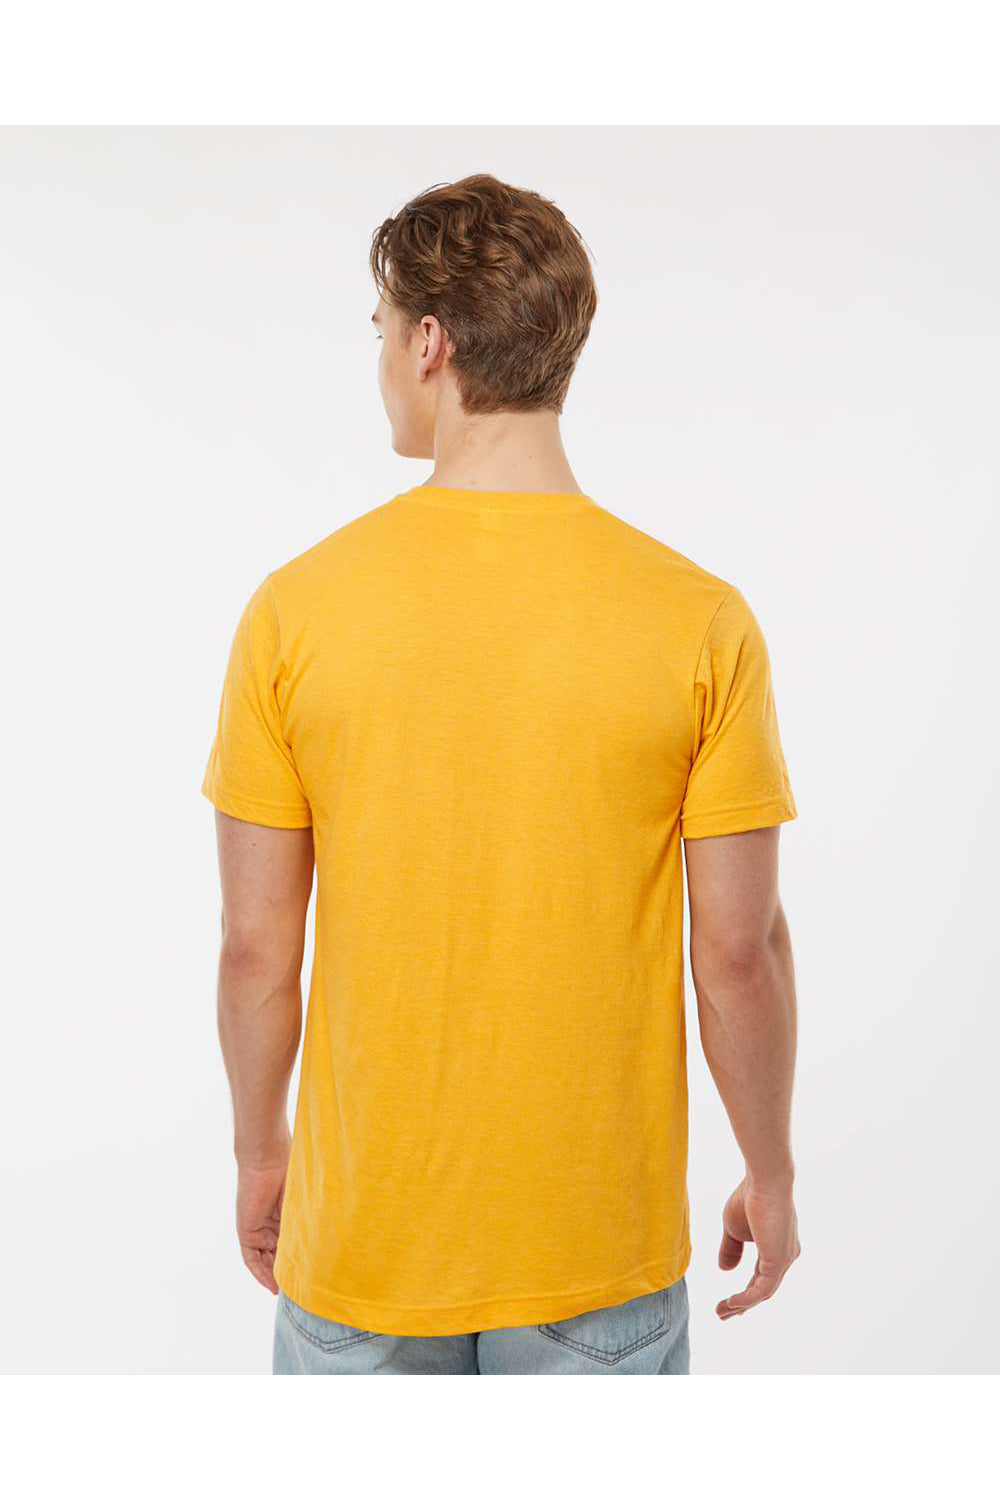 Tultex 202 Mens Fine Jersey Short Sleeve Crewneck T-Shirt Heather Mellow Yellow Model Back